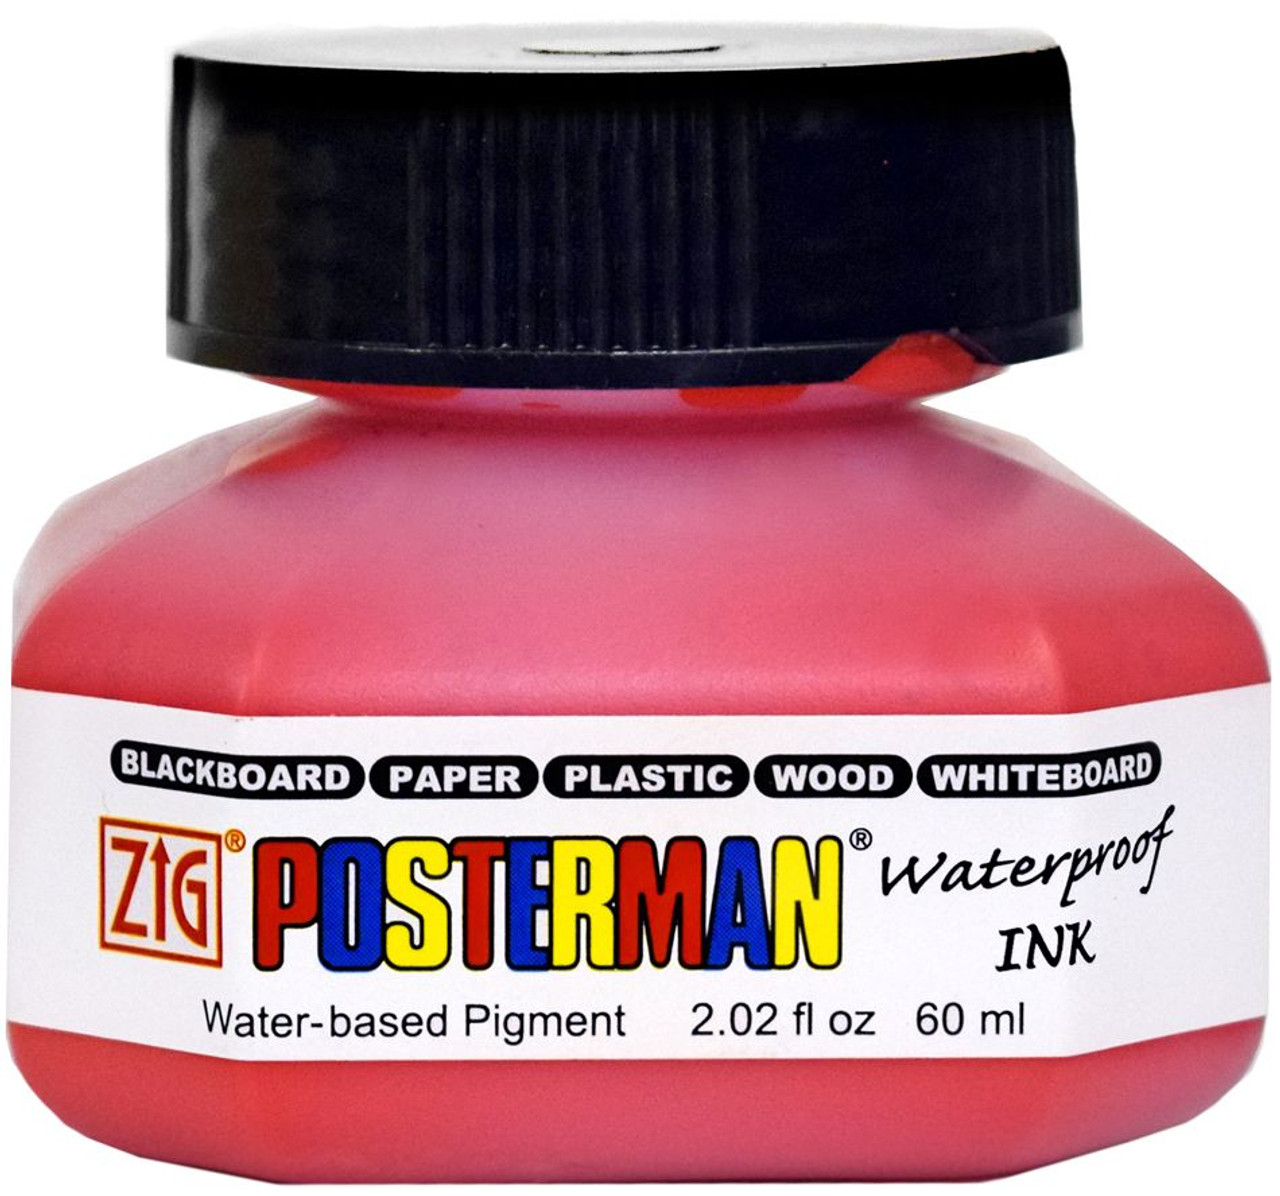 Zig Posterman Waterproof Ink- 60ml (2.02 fl oz)